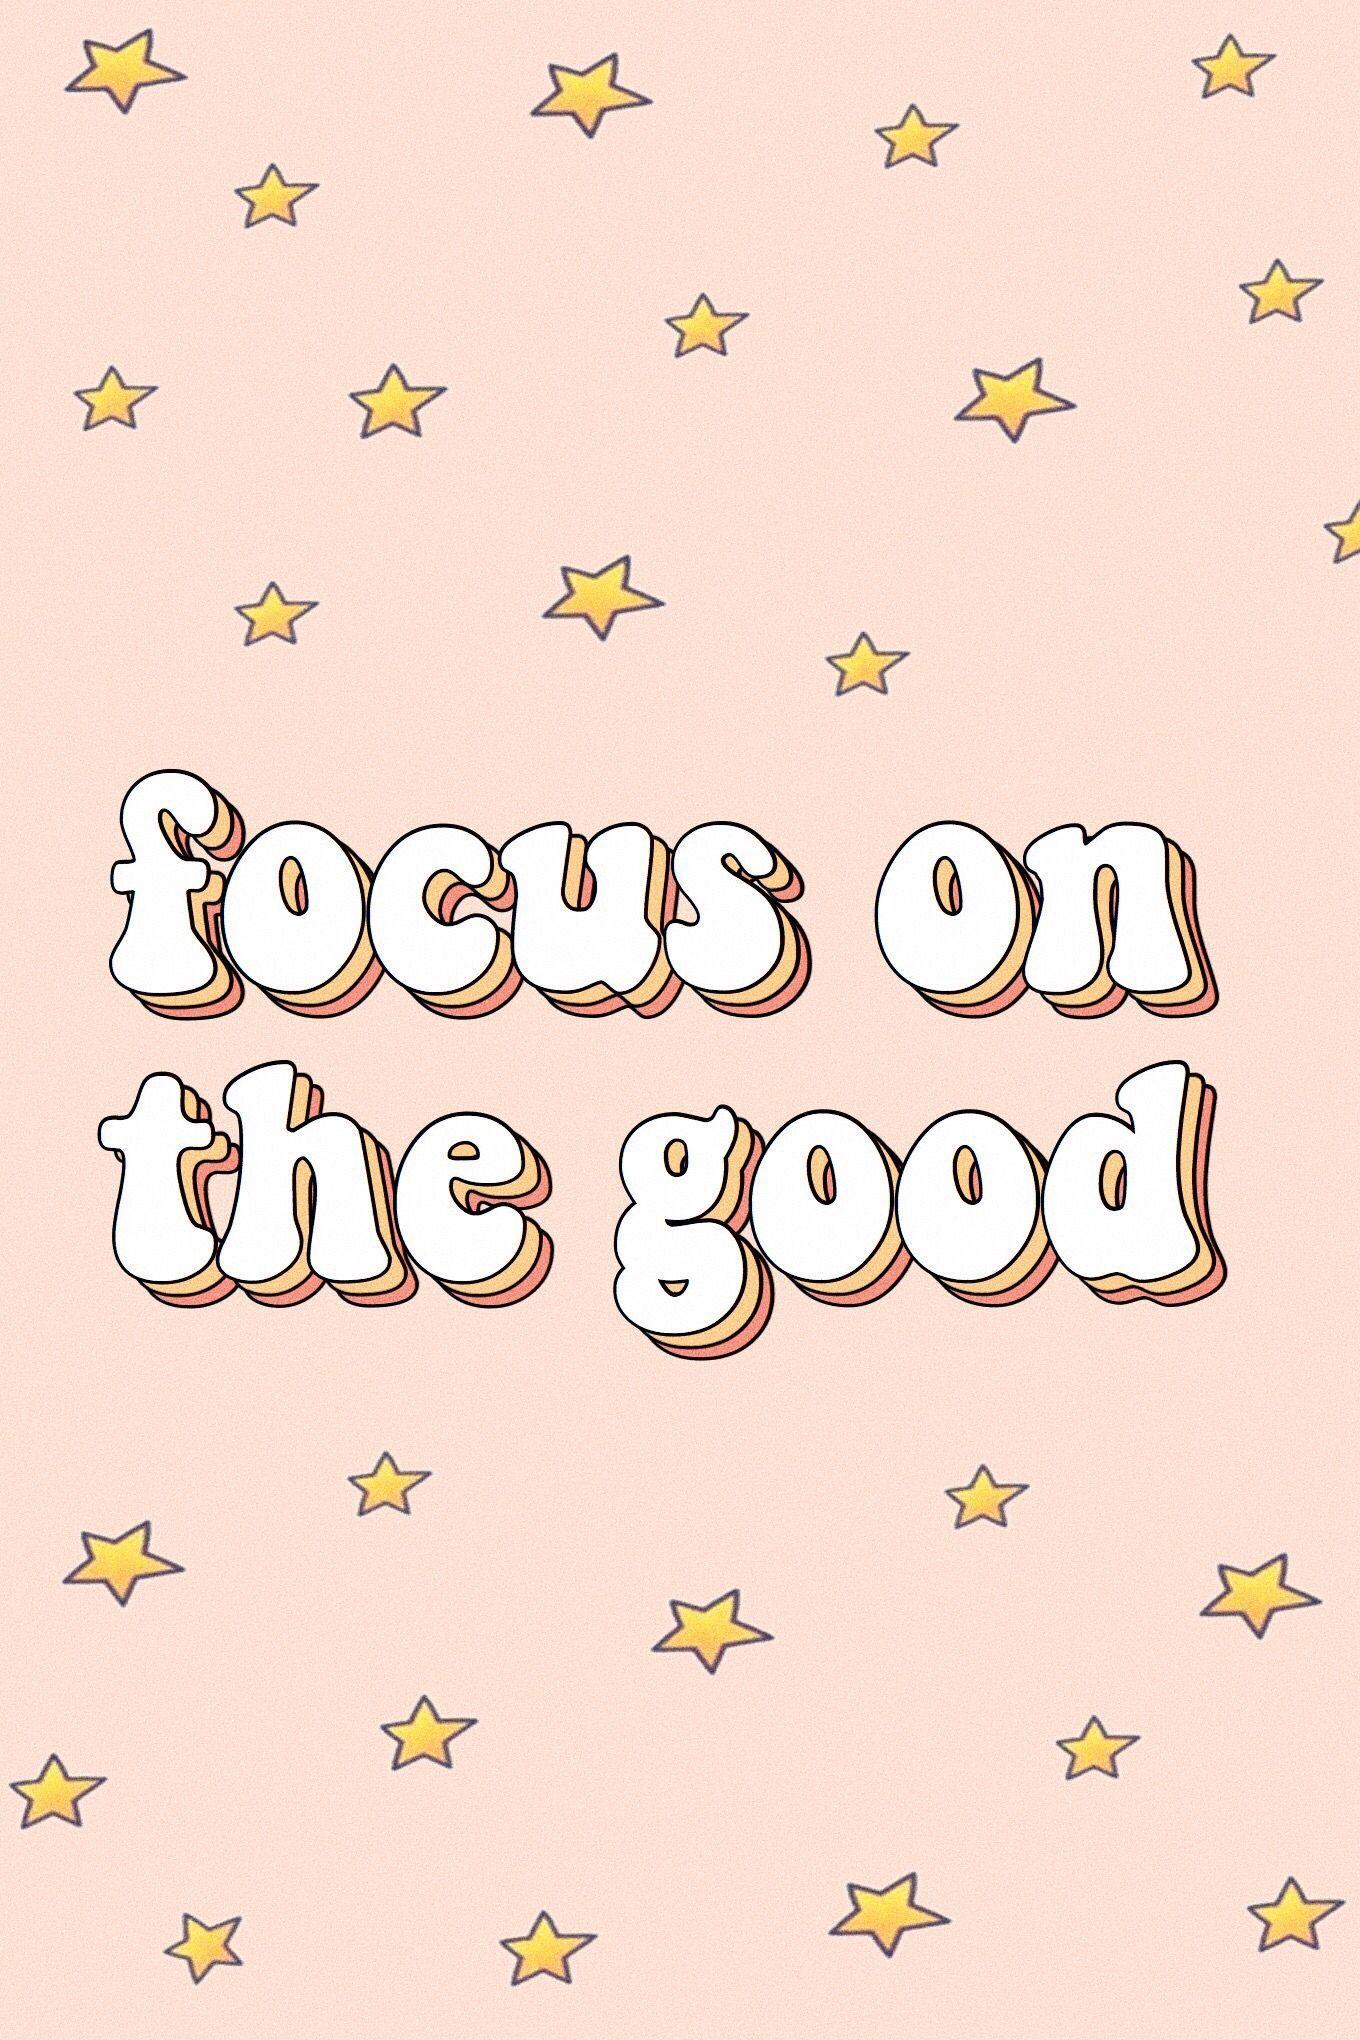 Focus on the good - VSCO, positivity